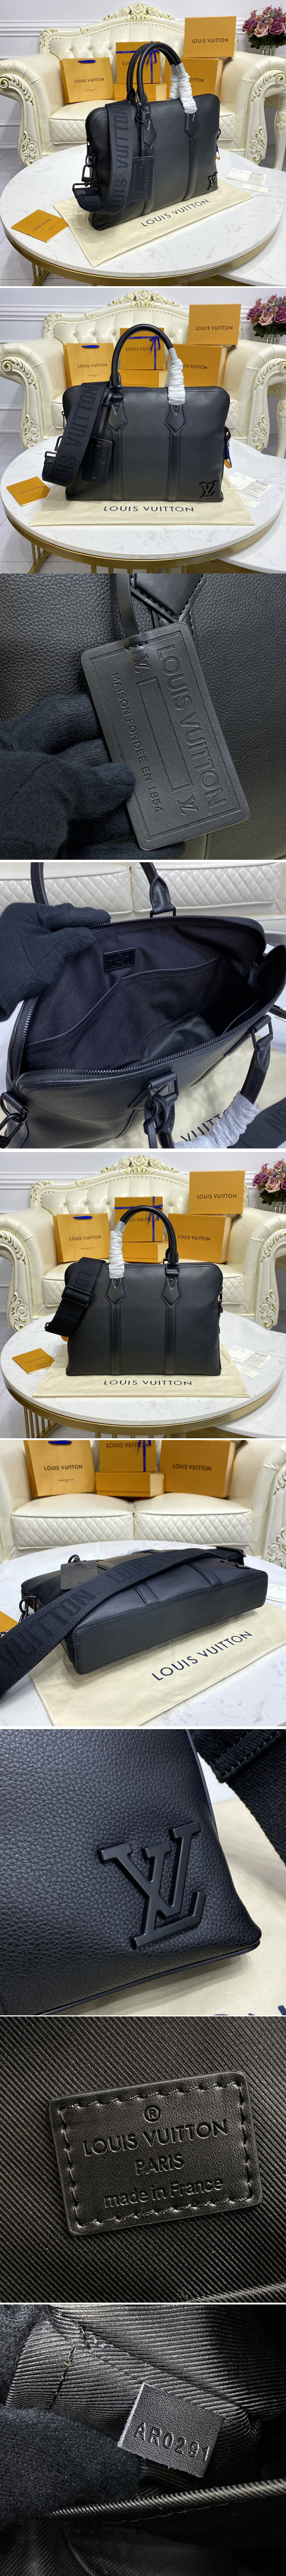 Louis Vuitton Briefcase (M59159)